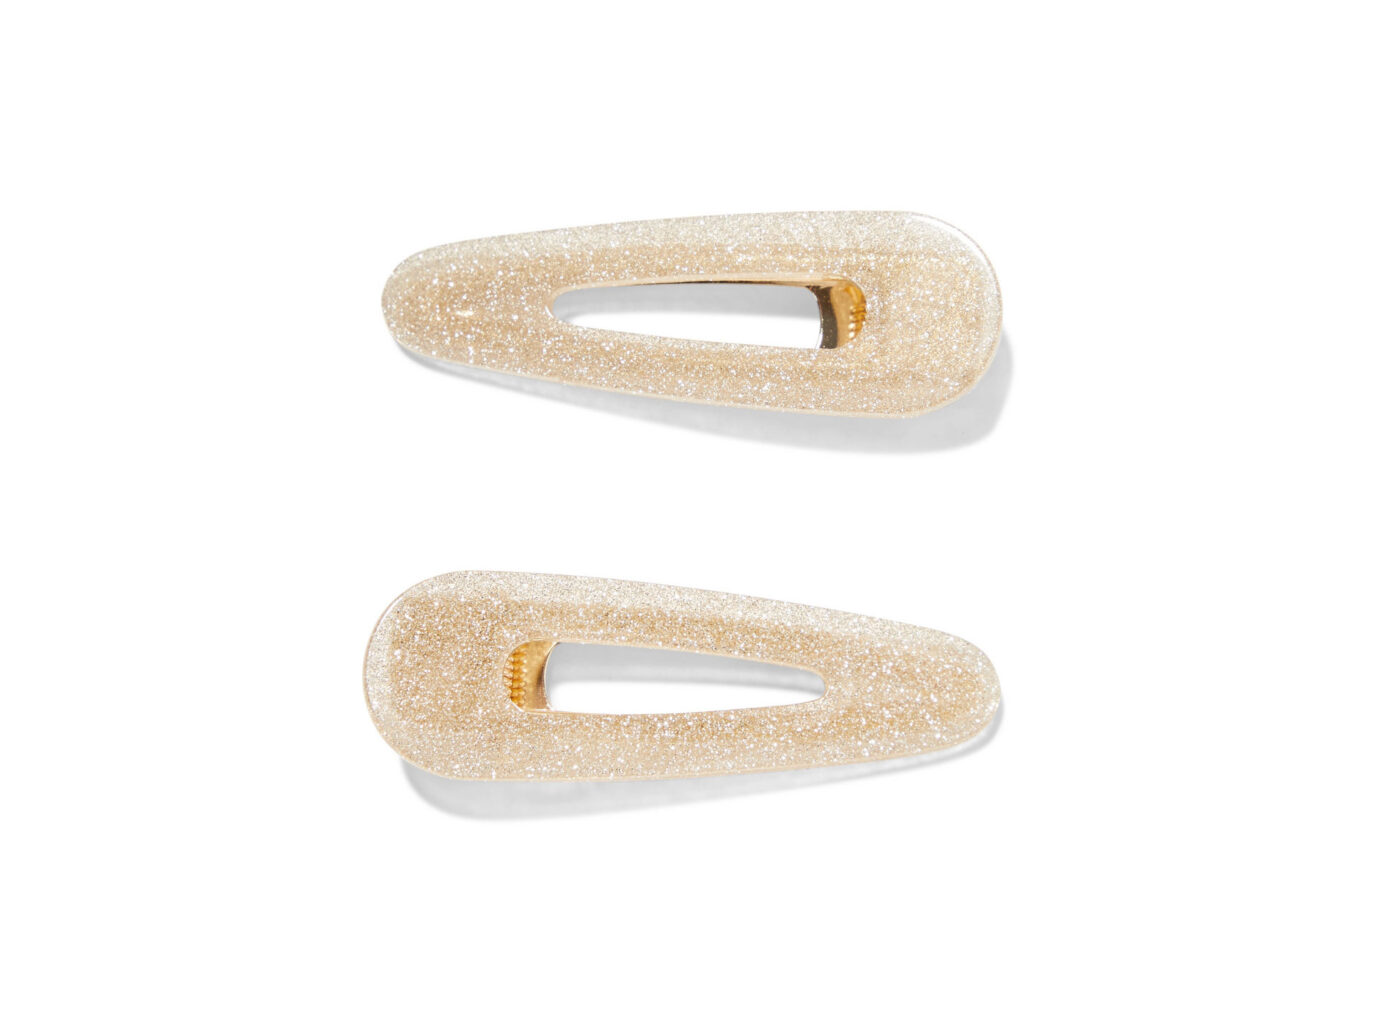 Valet Kelly set of two glittered resin hair clips